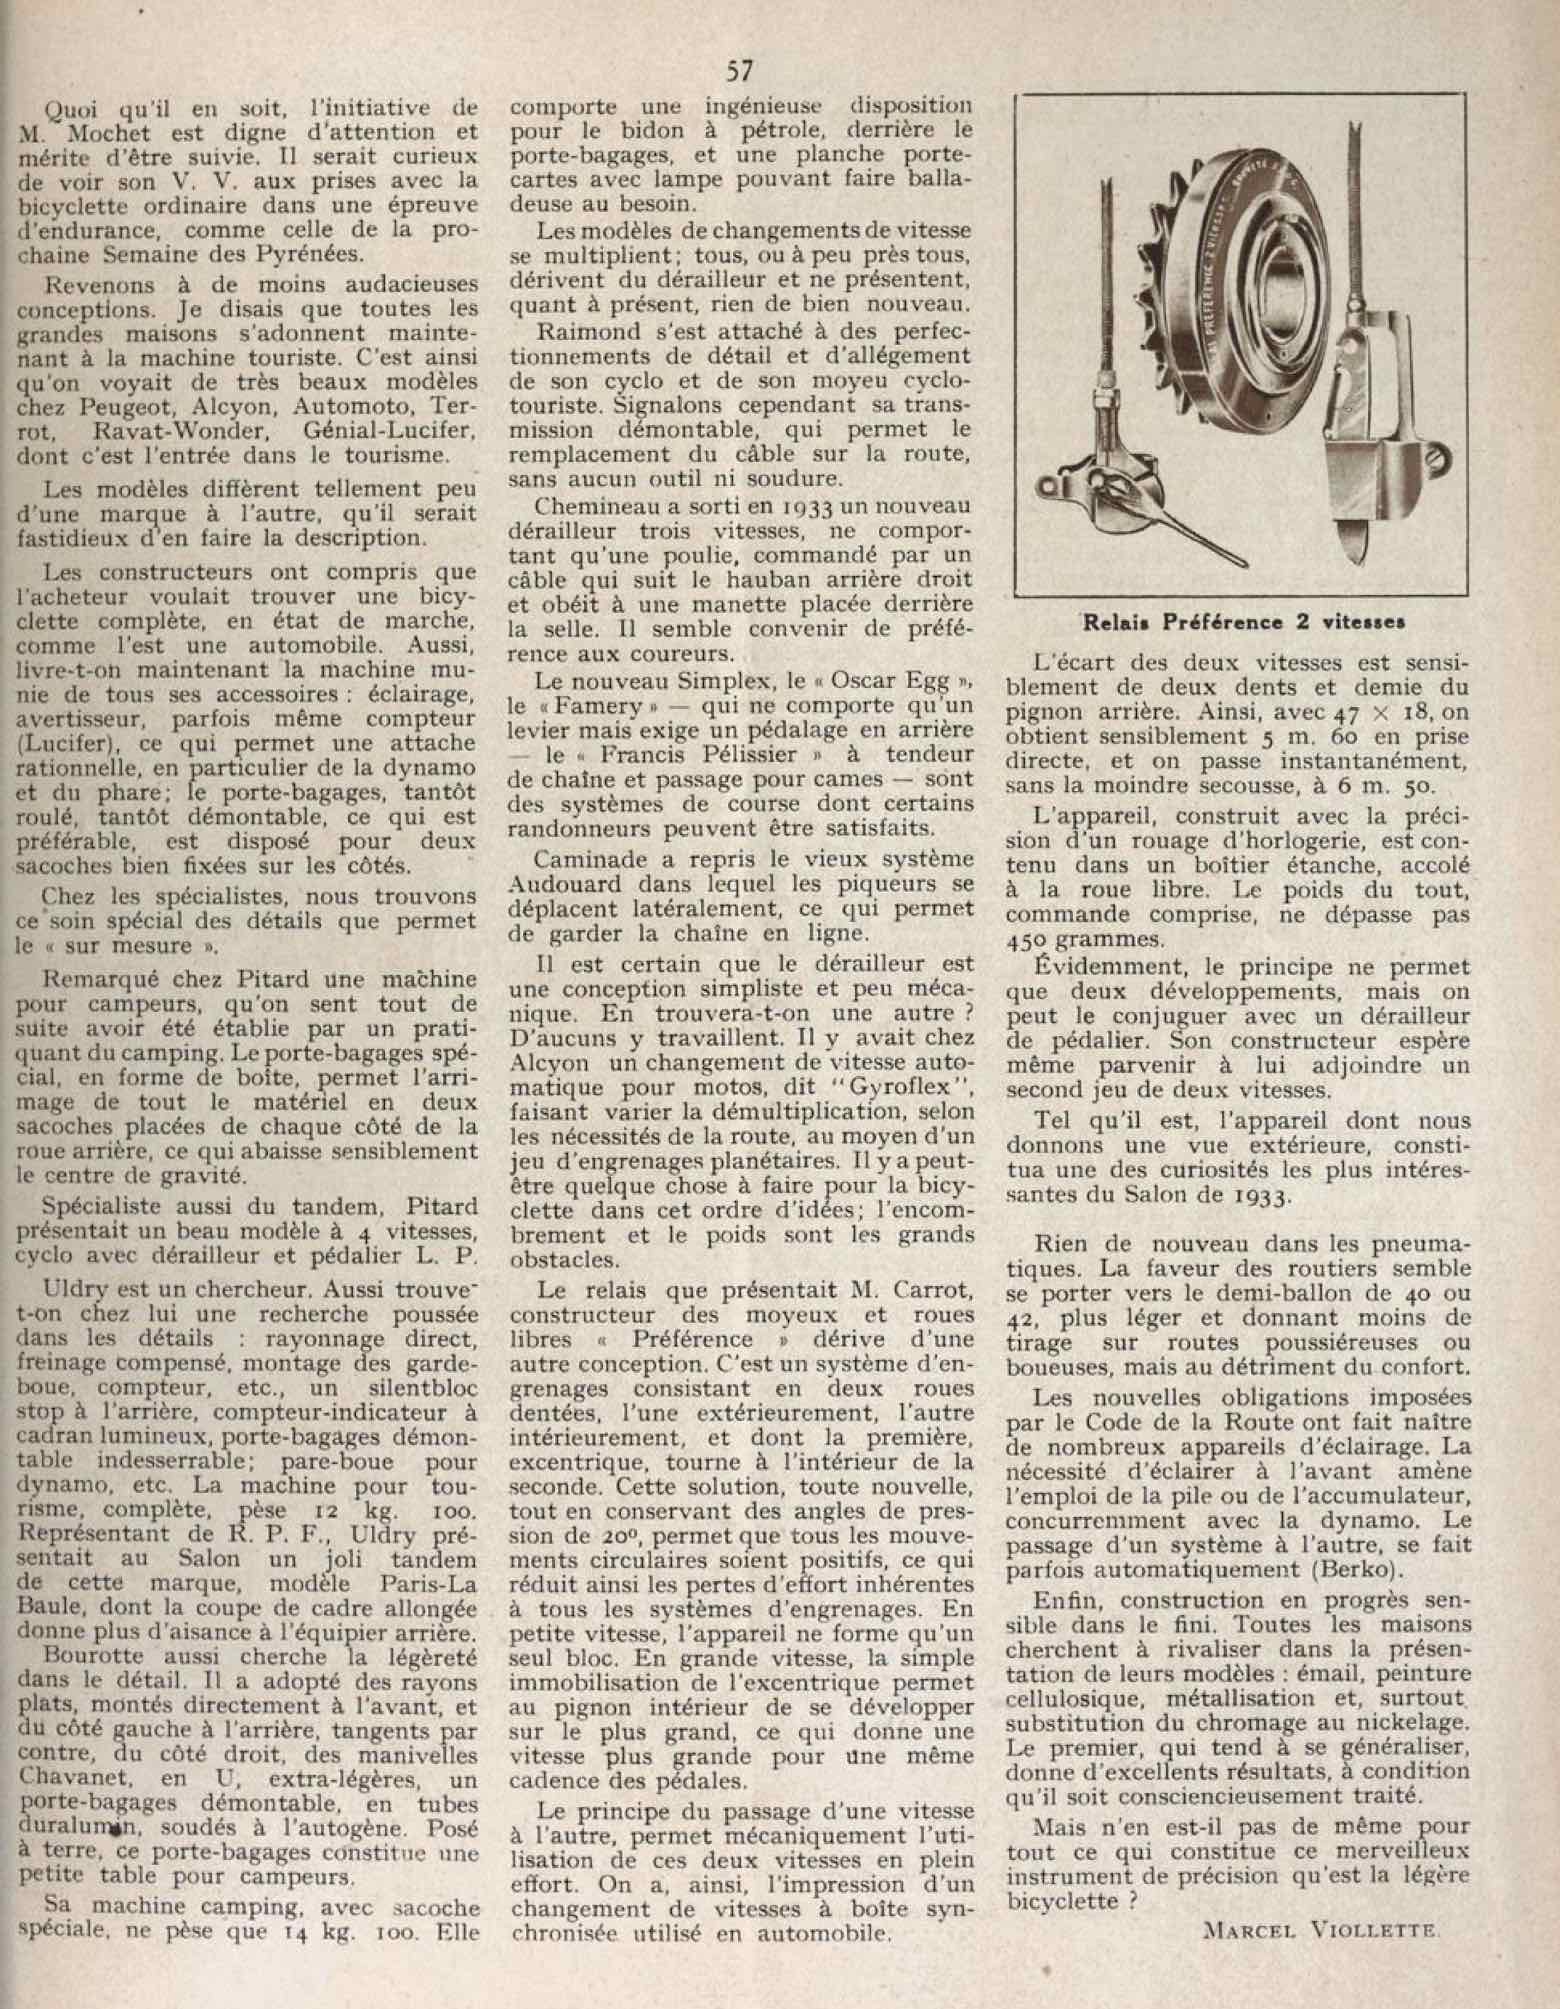 T.C.F. Revue Mensuelle February 1934 - Chronique cyclotouristique scan 2 main image